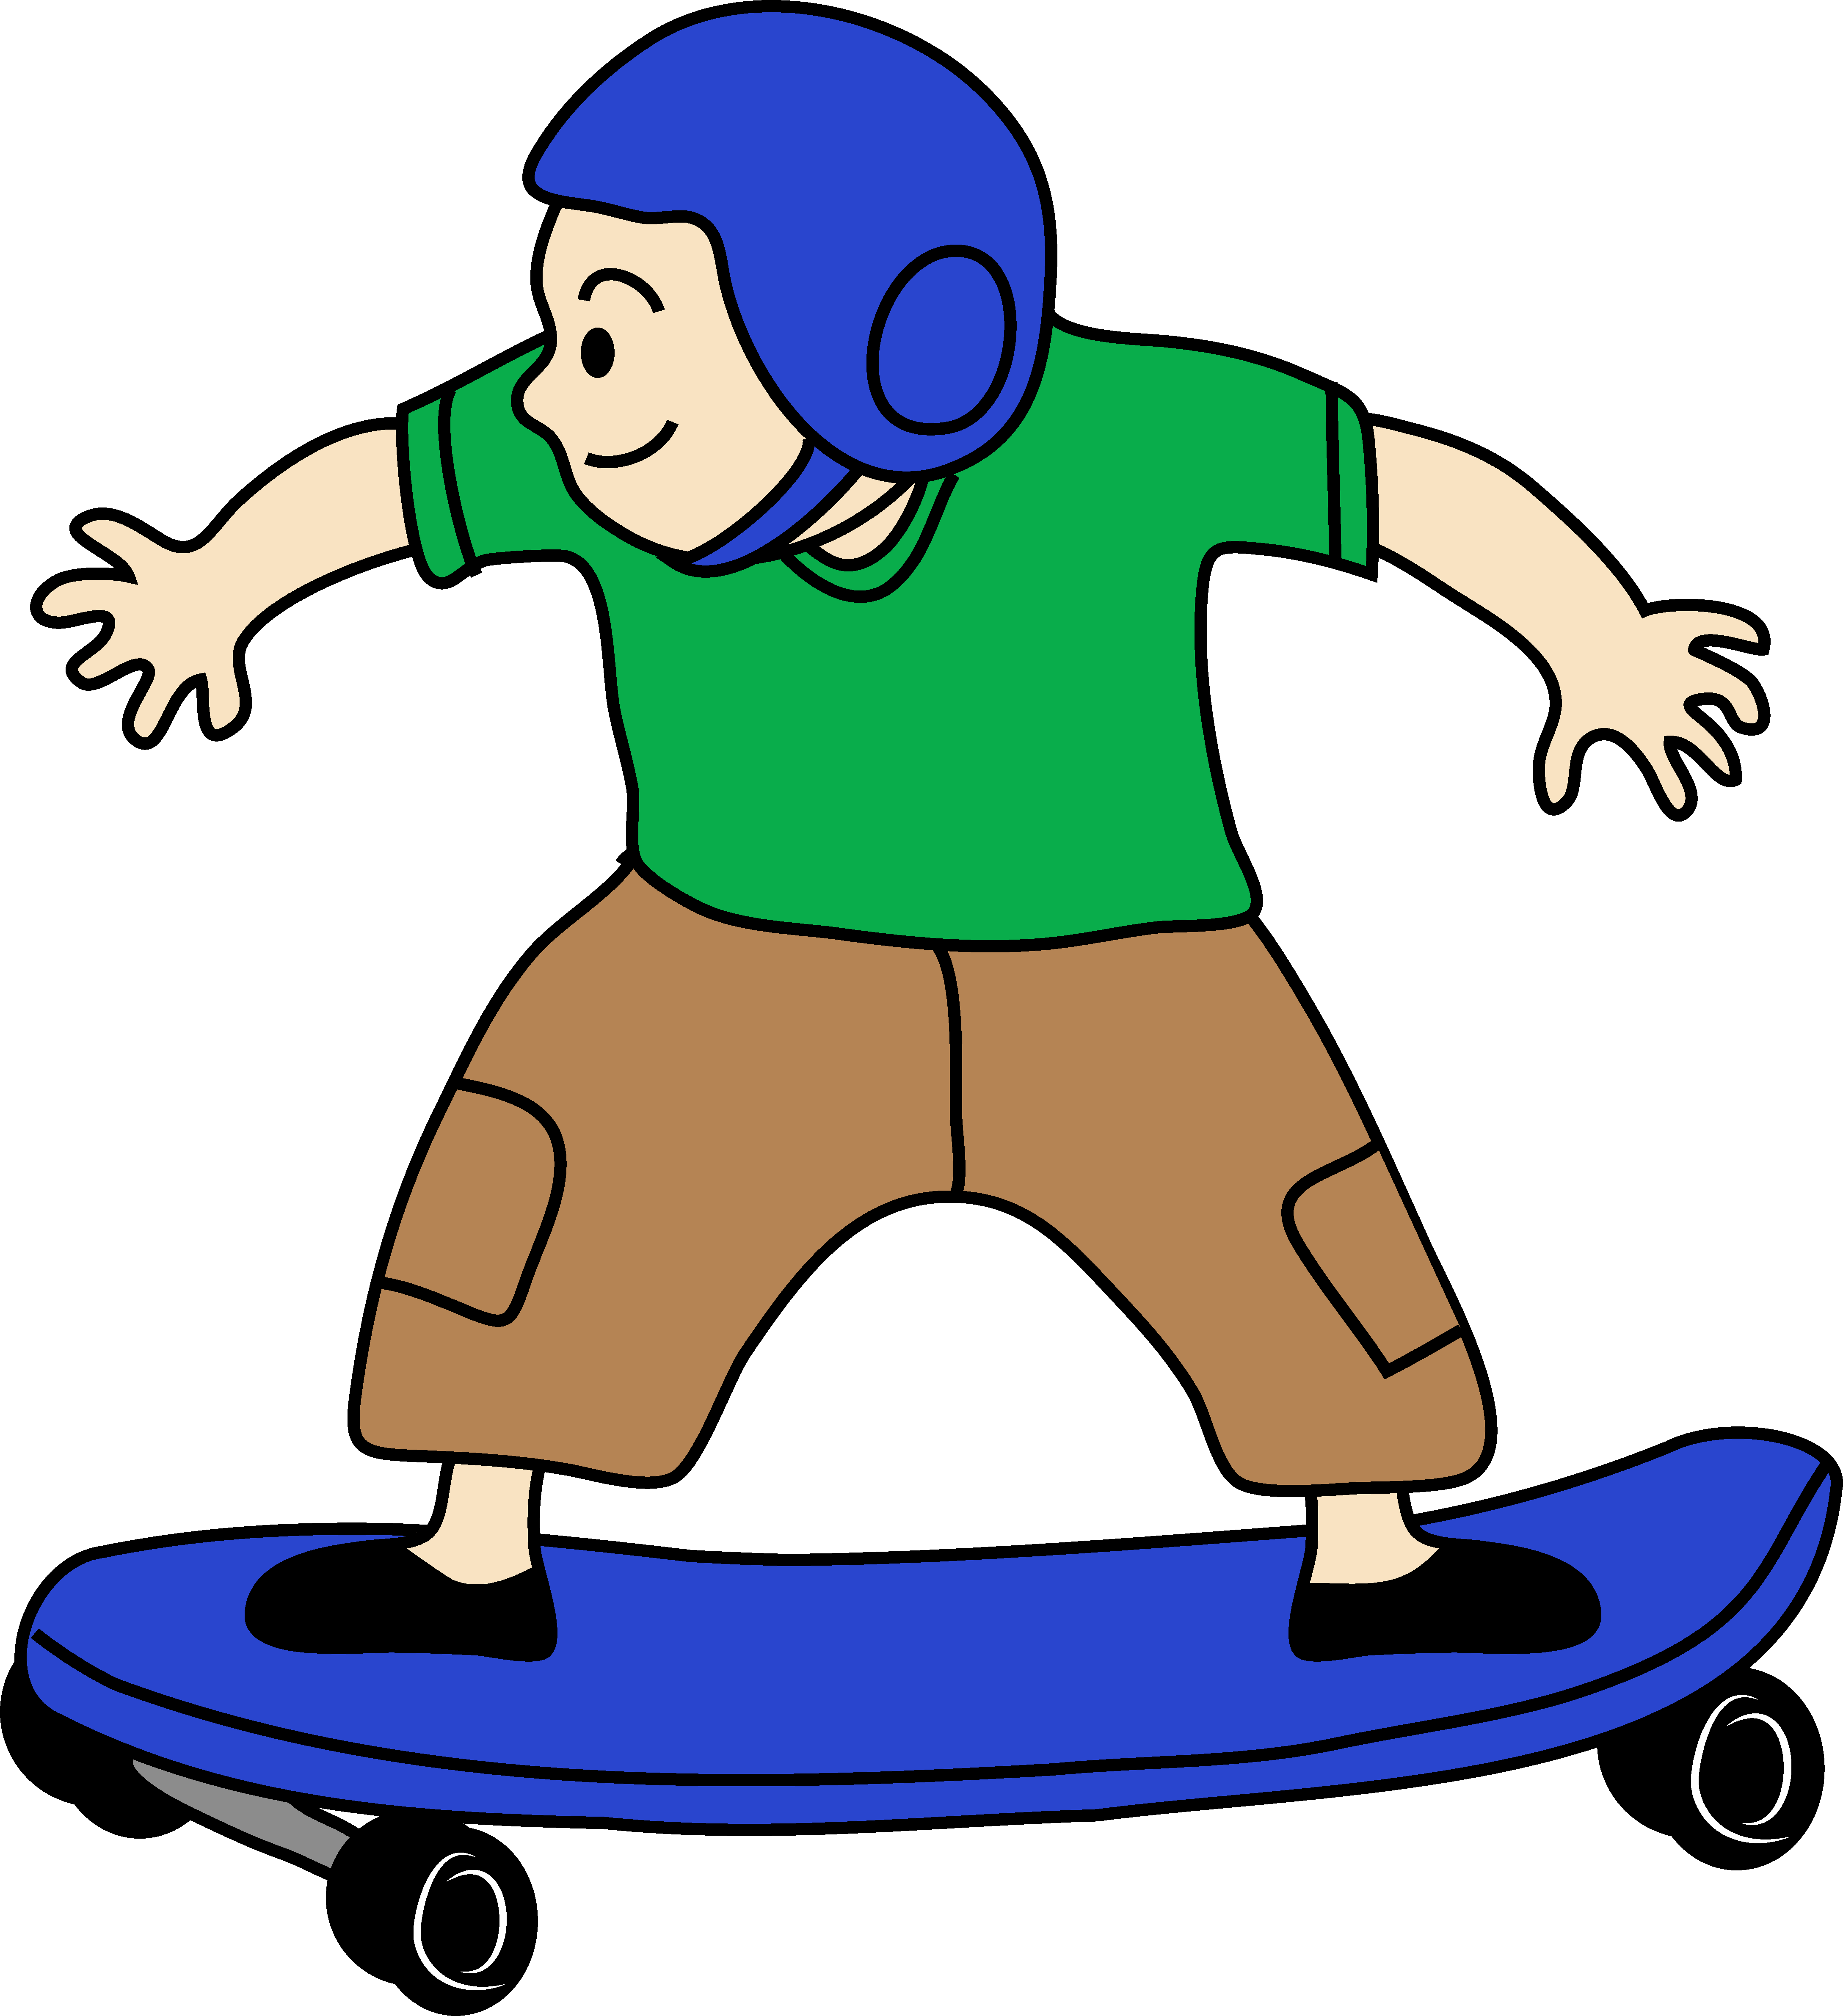 Skateboard images clip art